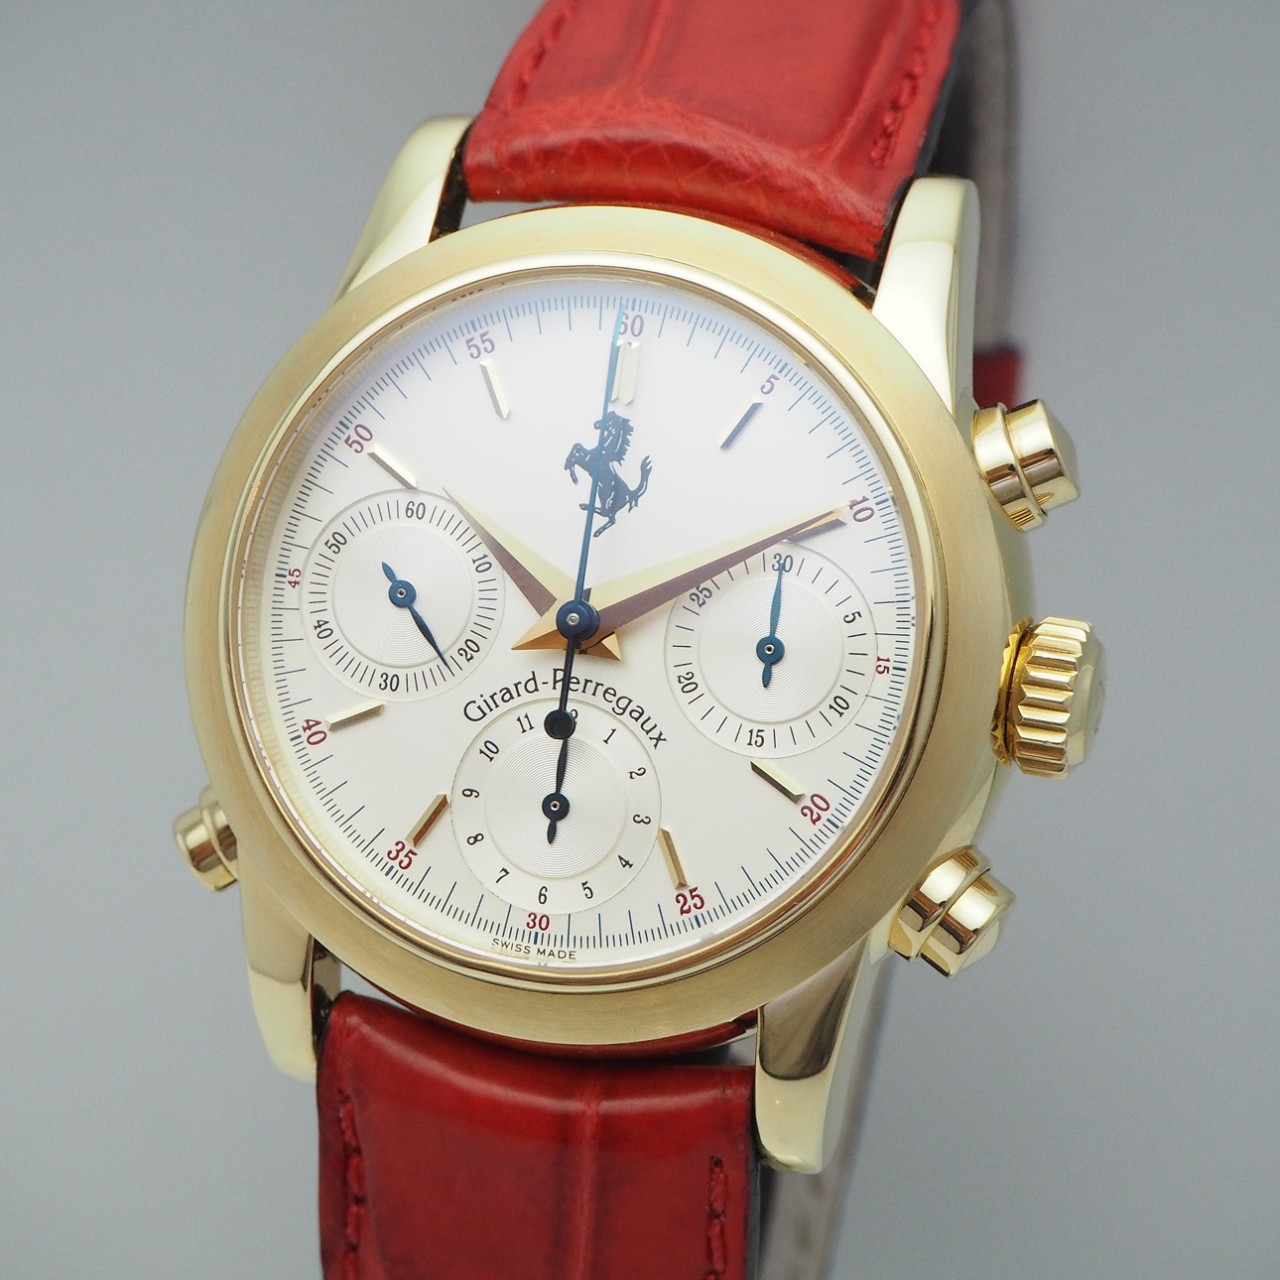 Girard Perregaux Ferrari Chronograph Rattrapante F-40, 9015, Gold18k/750, Box+Papiere